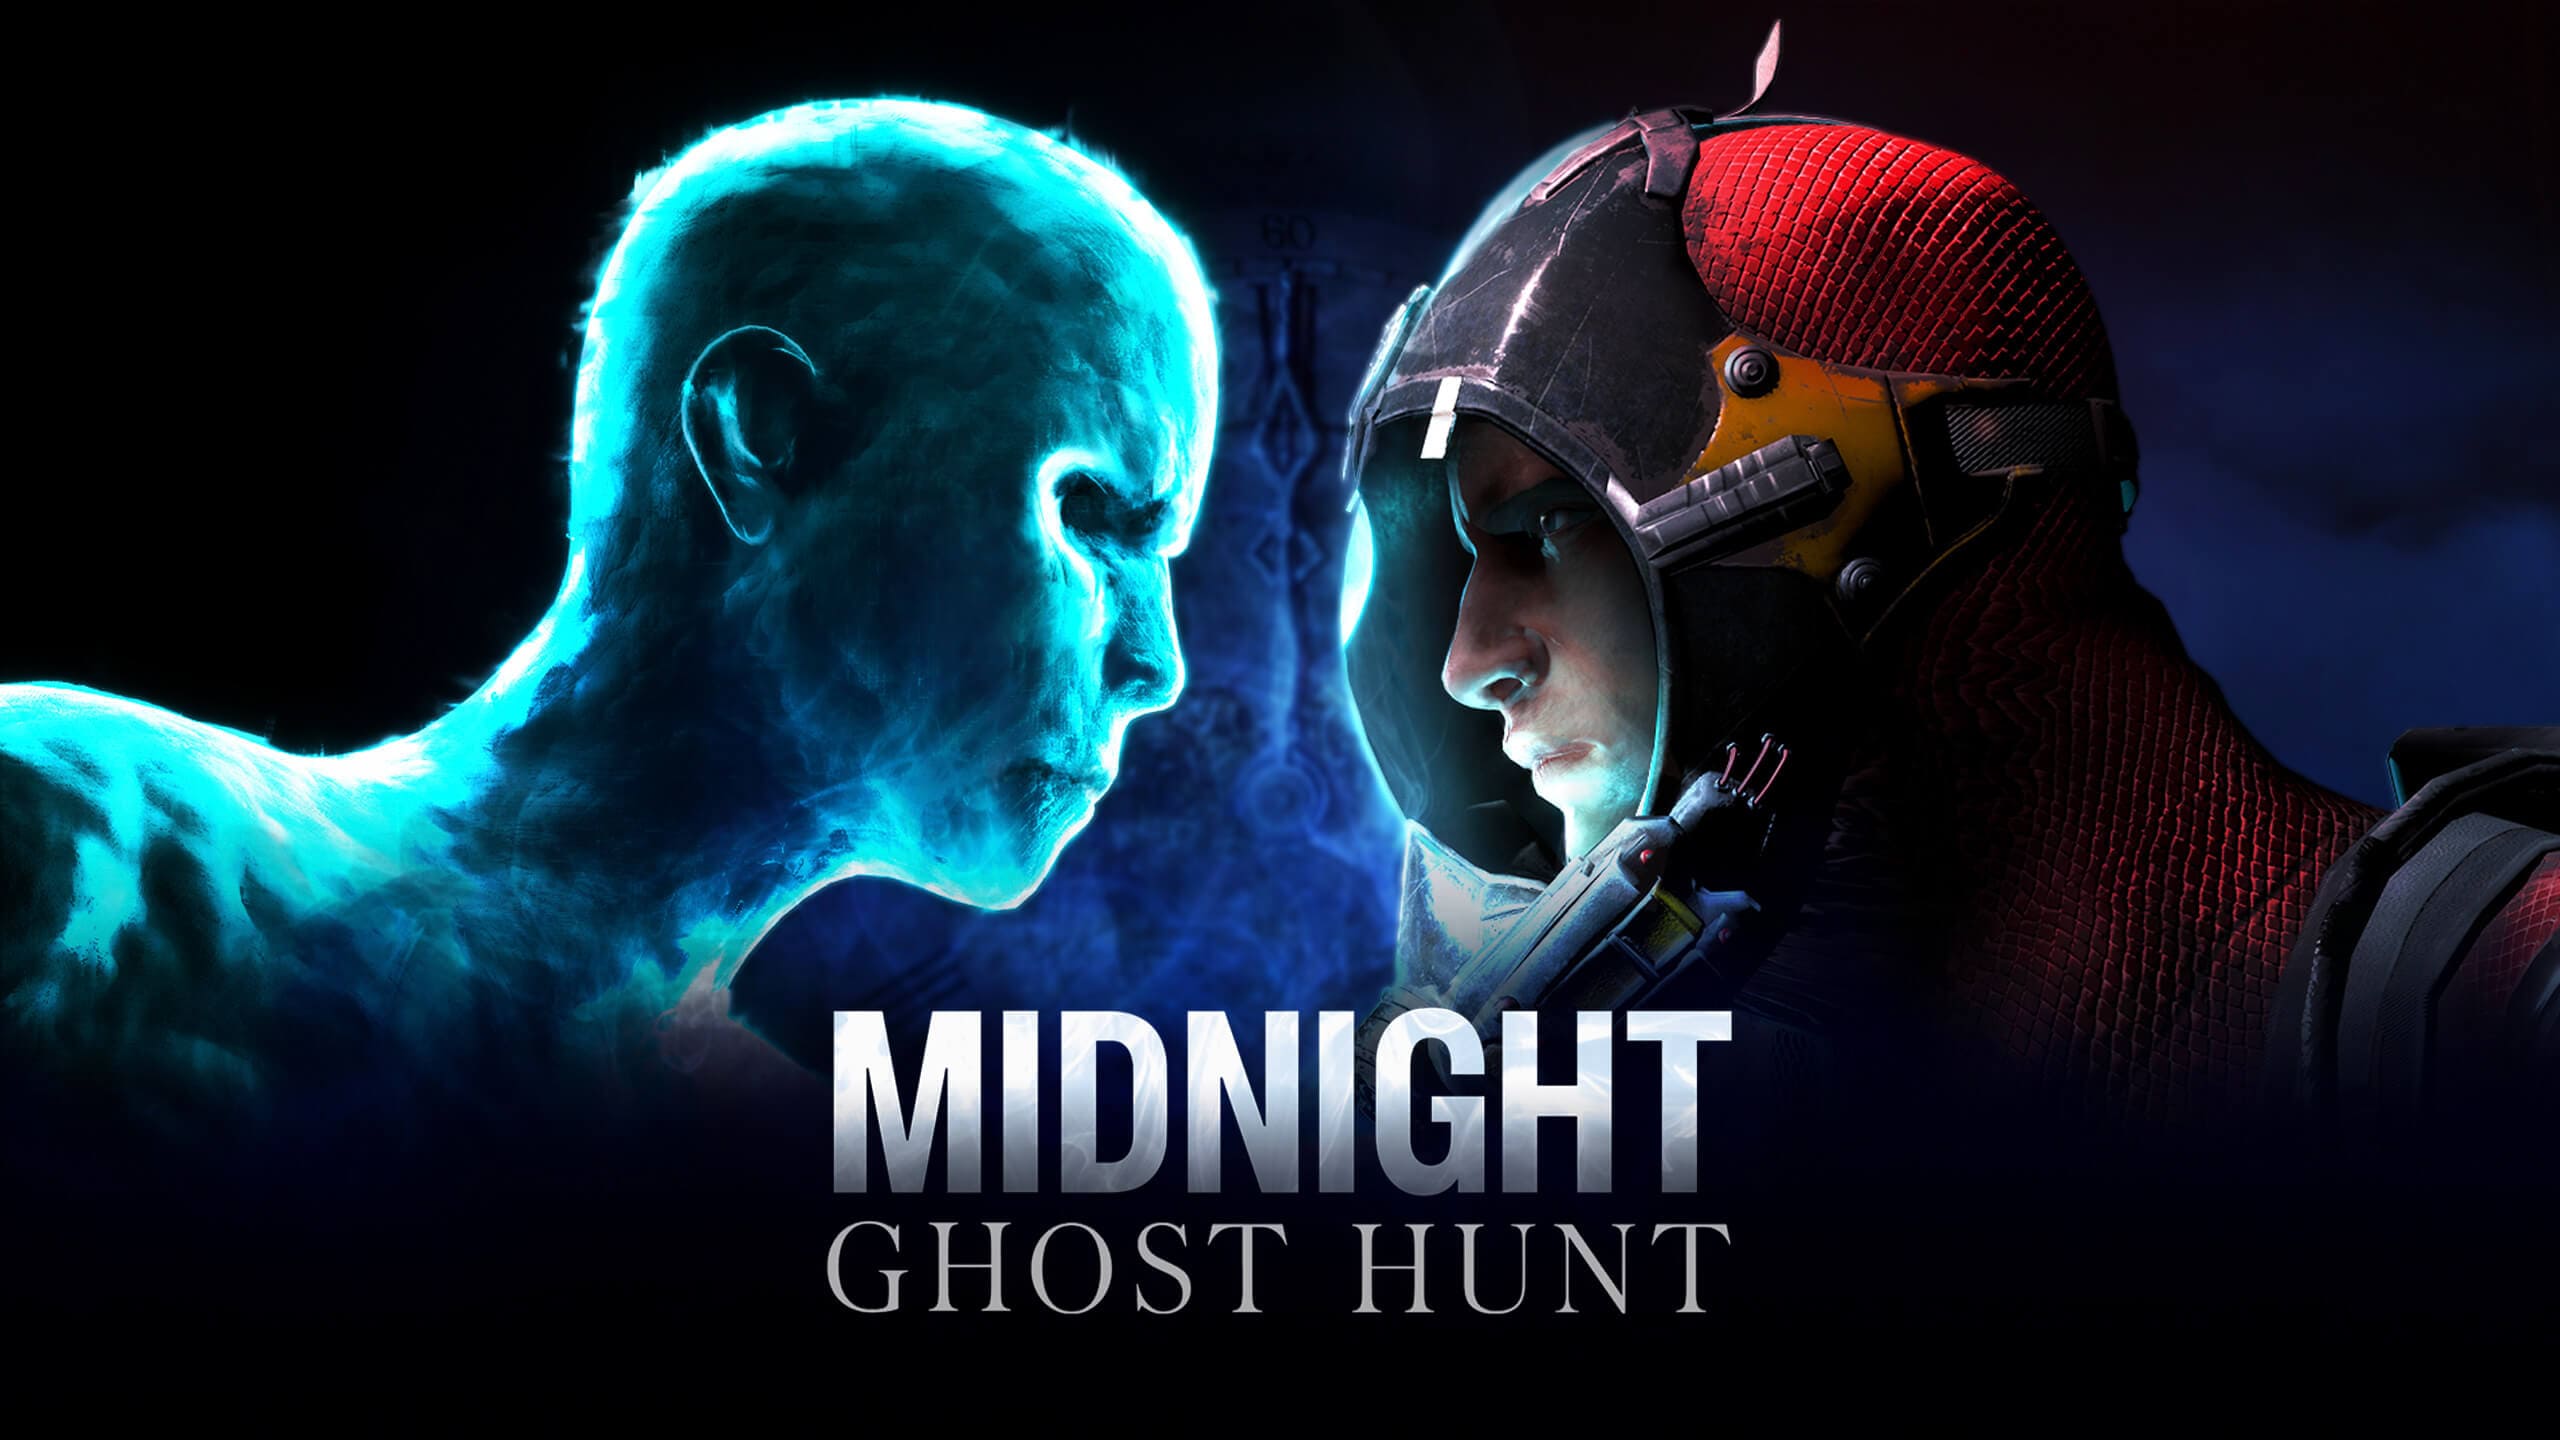 Jogo Grátis na Epic Games Store - Desvende os Mistérios de Midnight Ghost Hunt